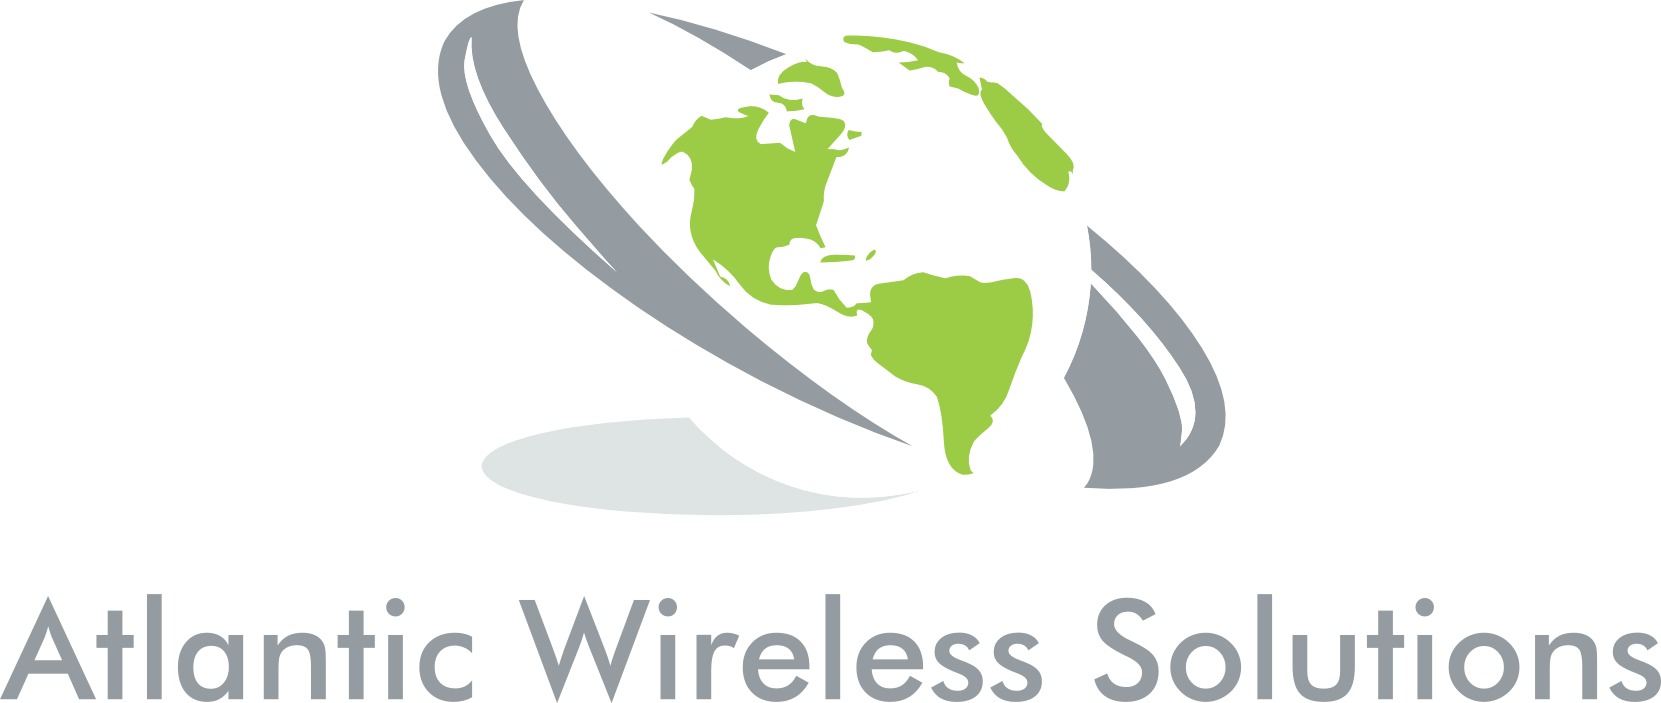 Atlantic Wireless Solutions